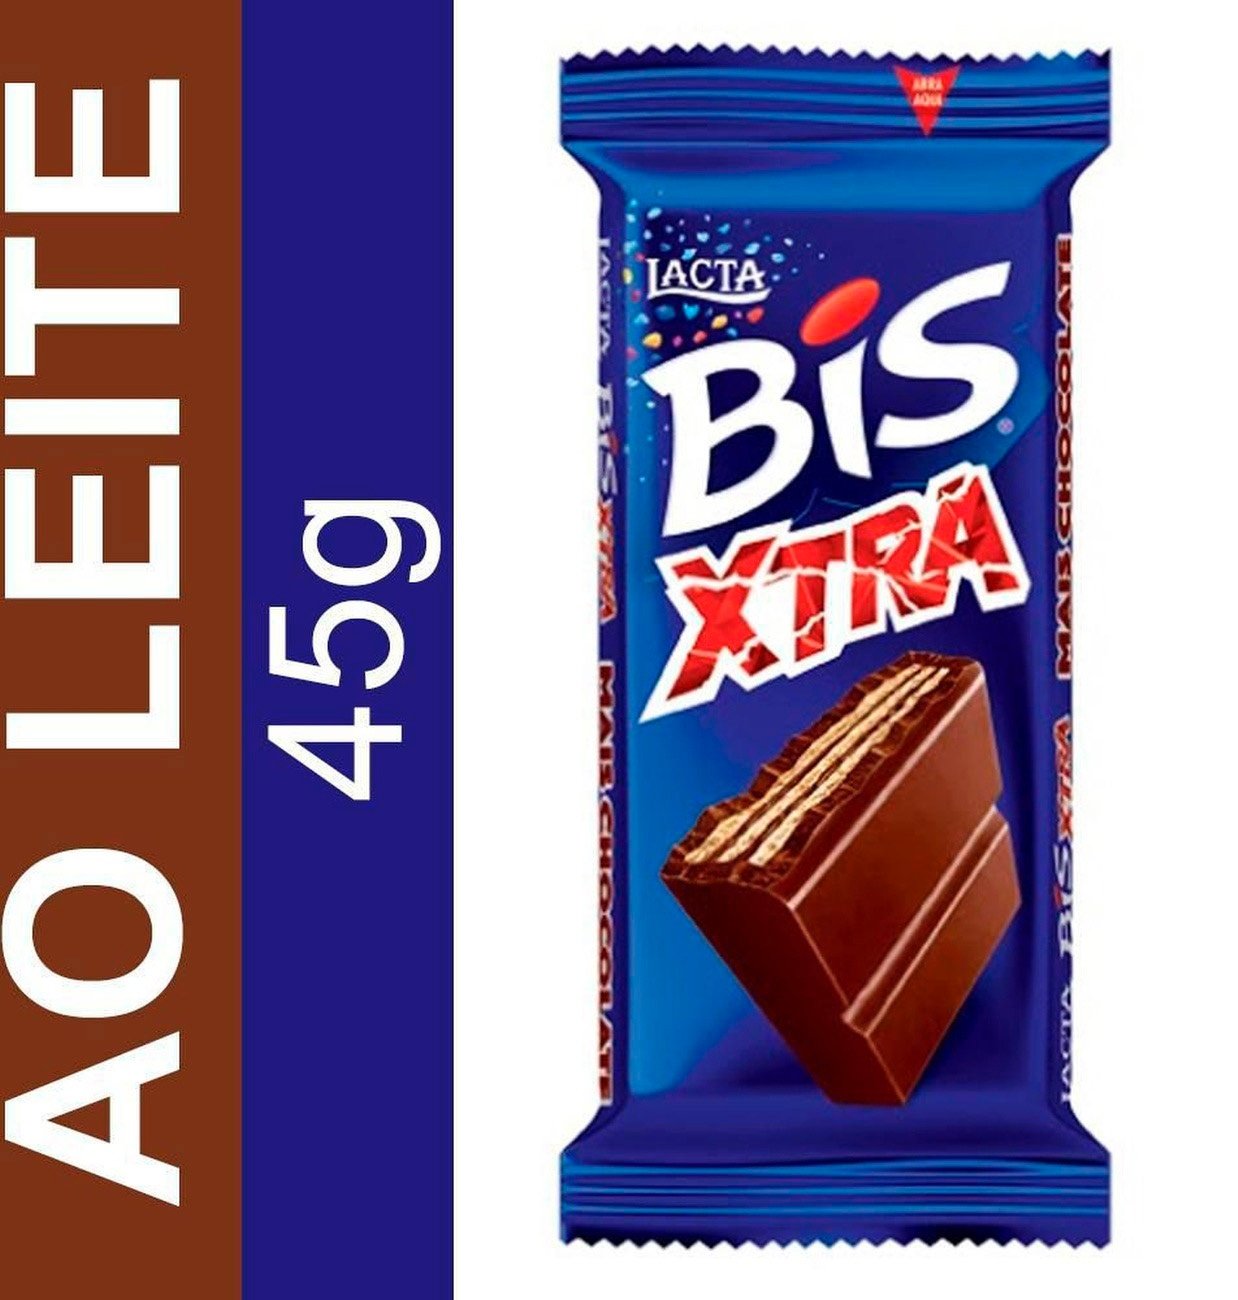 Chocolate Wafer Lacta Bis Xtra Oreo 45g, Chocolate e Confeito